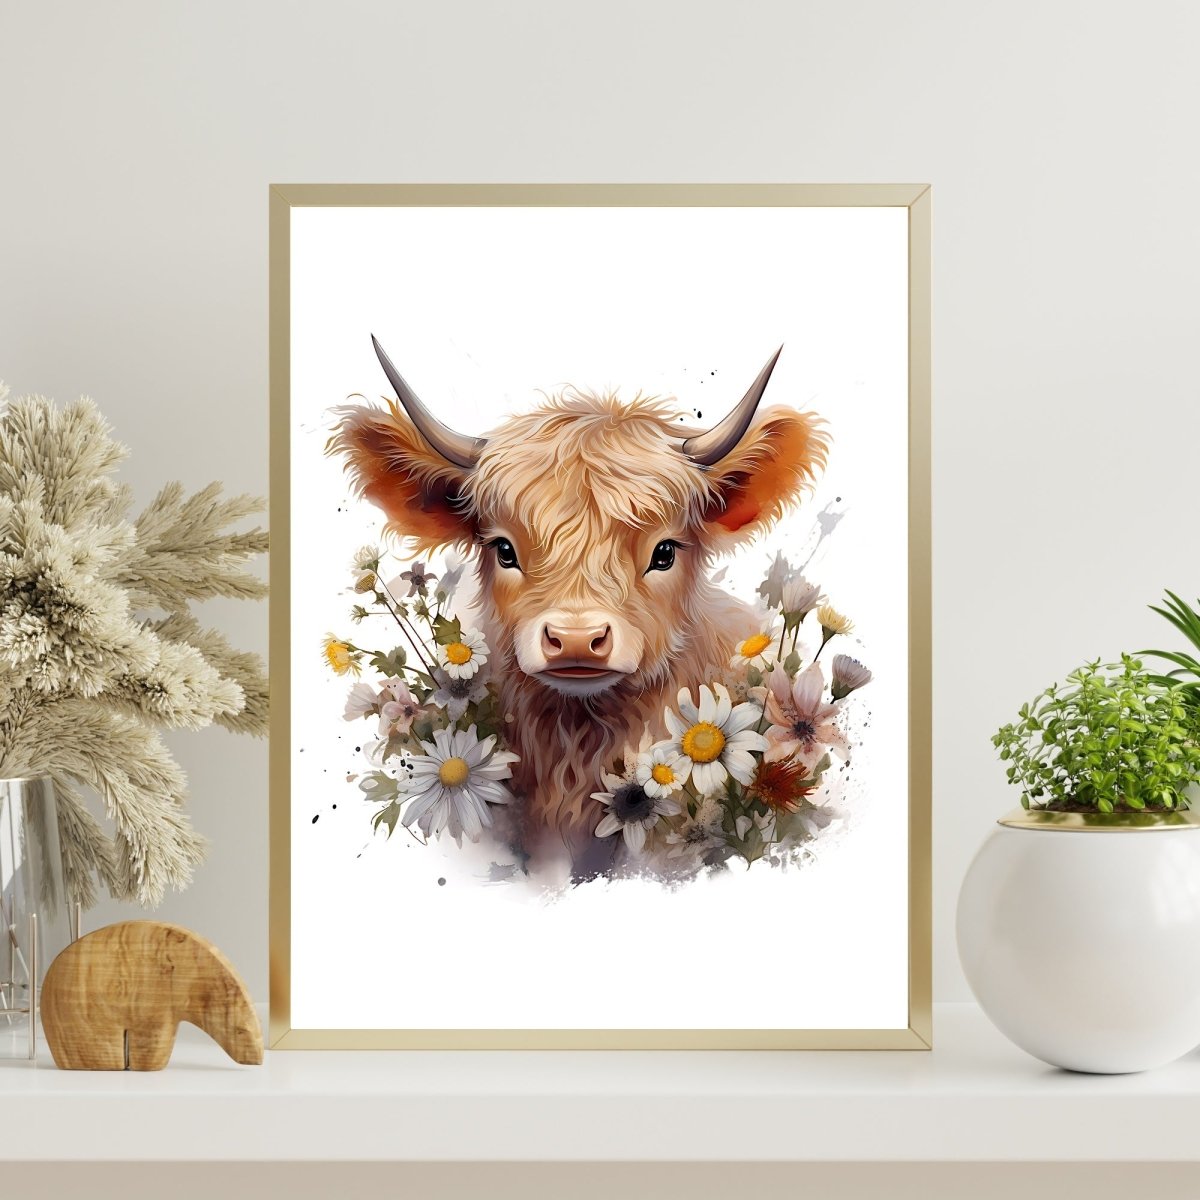 Springtime Baby Highland Cow - Nursery Wall Art Print - Everything Pixel